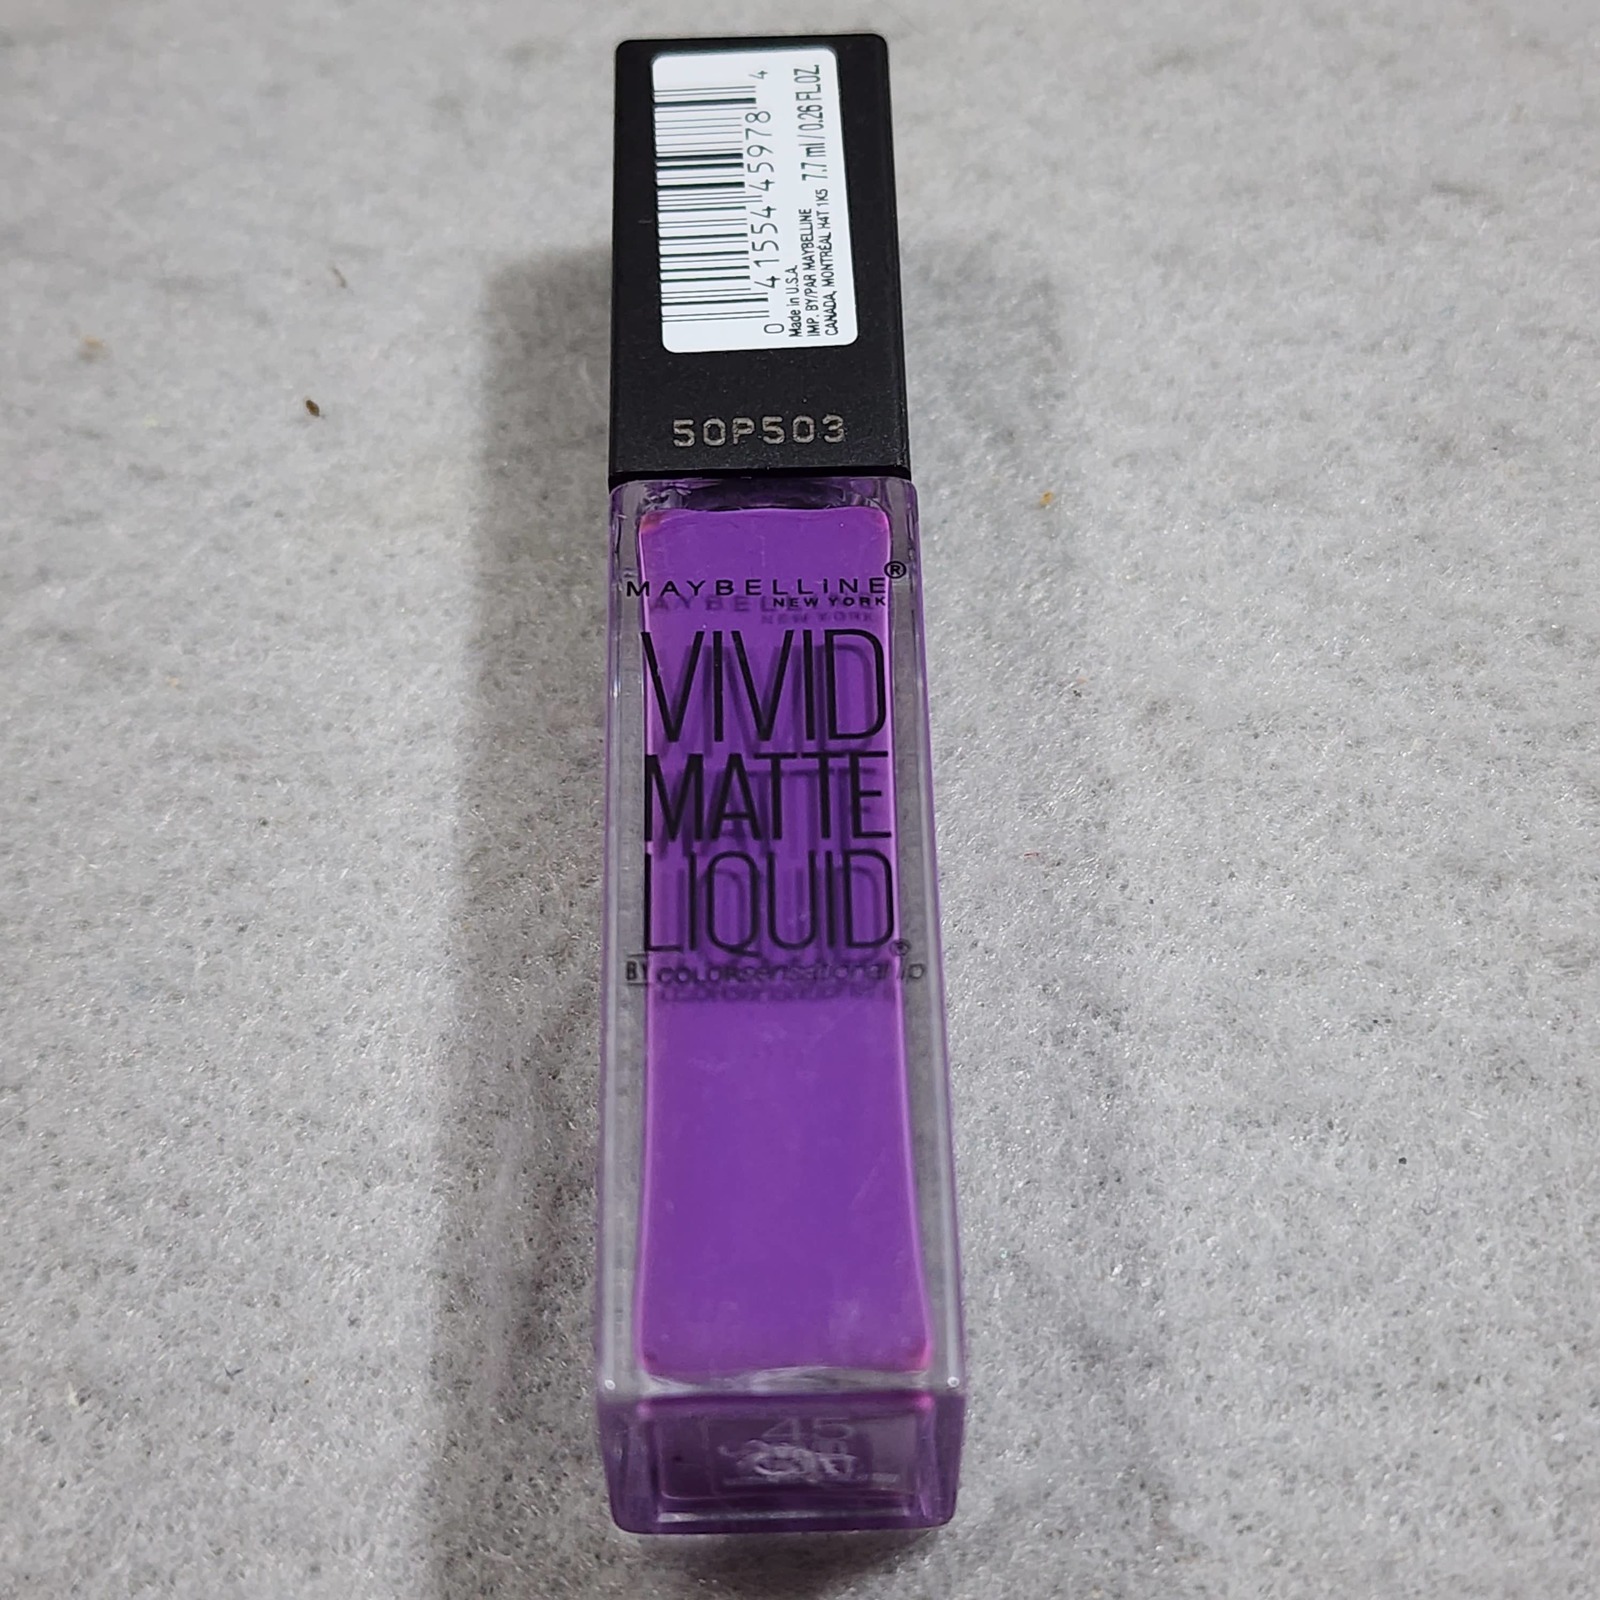 Maybelline New York 45 VIVID VIOLET Vivid Matte Liquid ColorSensational 0.26floz - $5.44